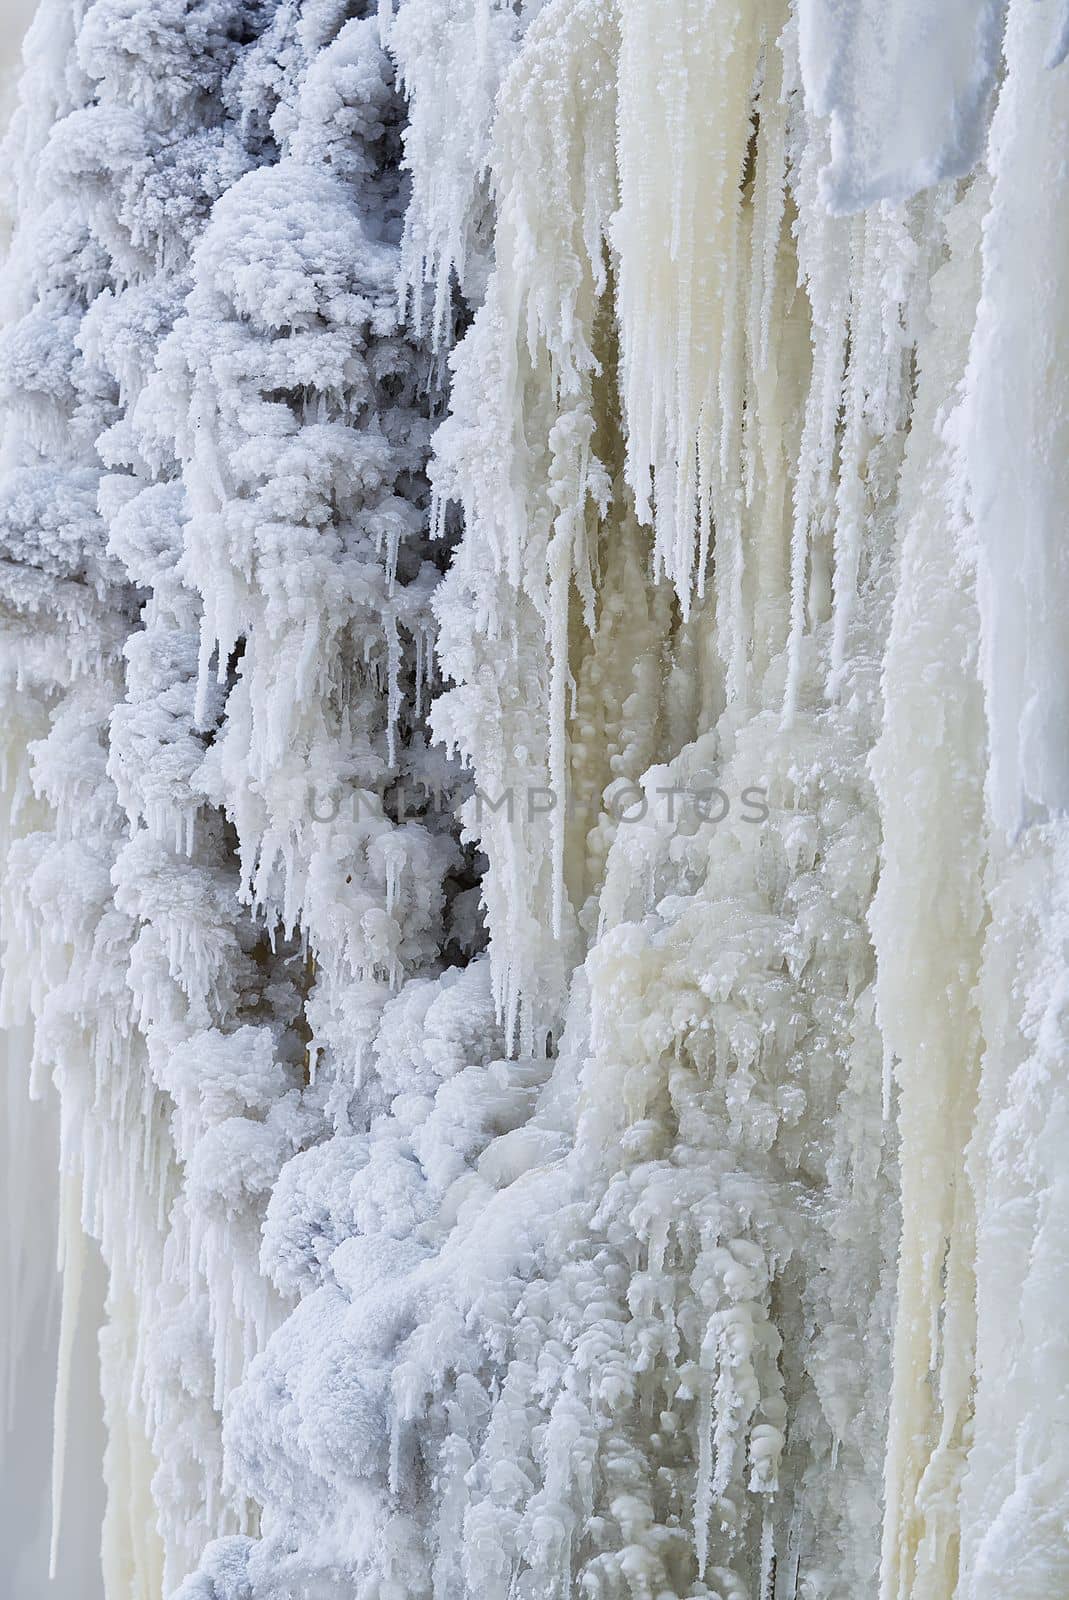 Frozen small mountain waterfall close up. Frozen Jagala Falls, Estonia. small river waterfall frozen in winter.